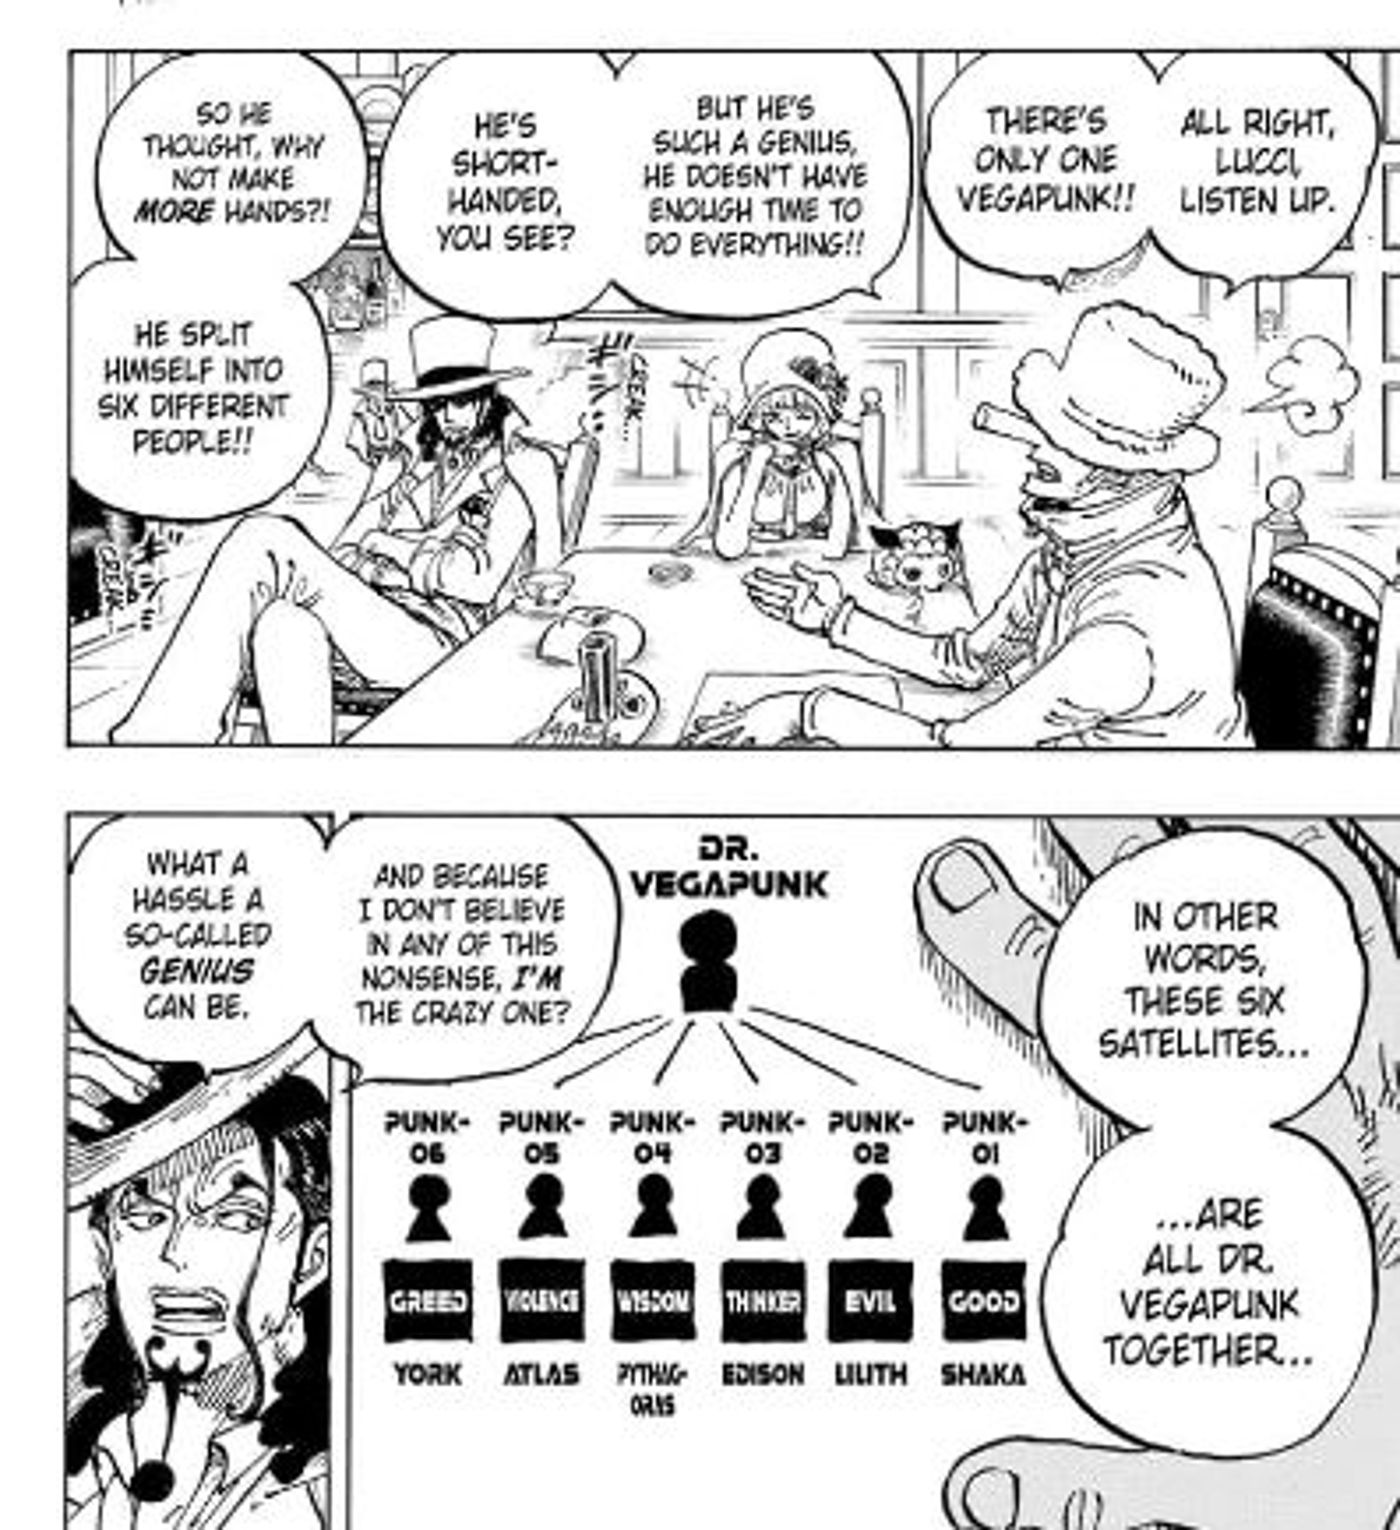 One-Piece-1062-Vegapunk-theory